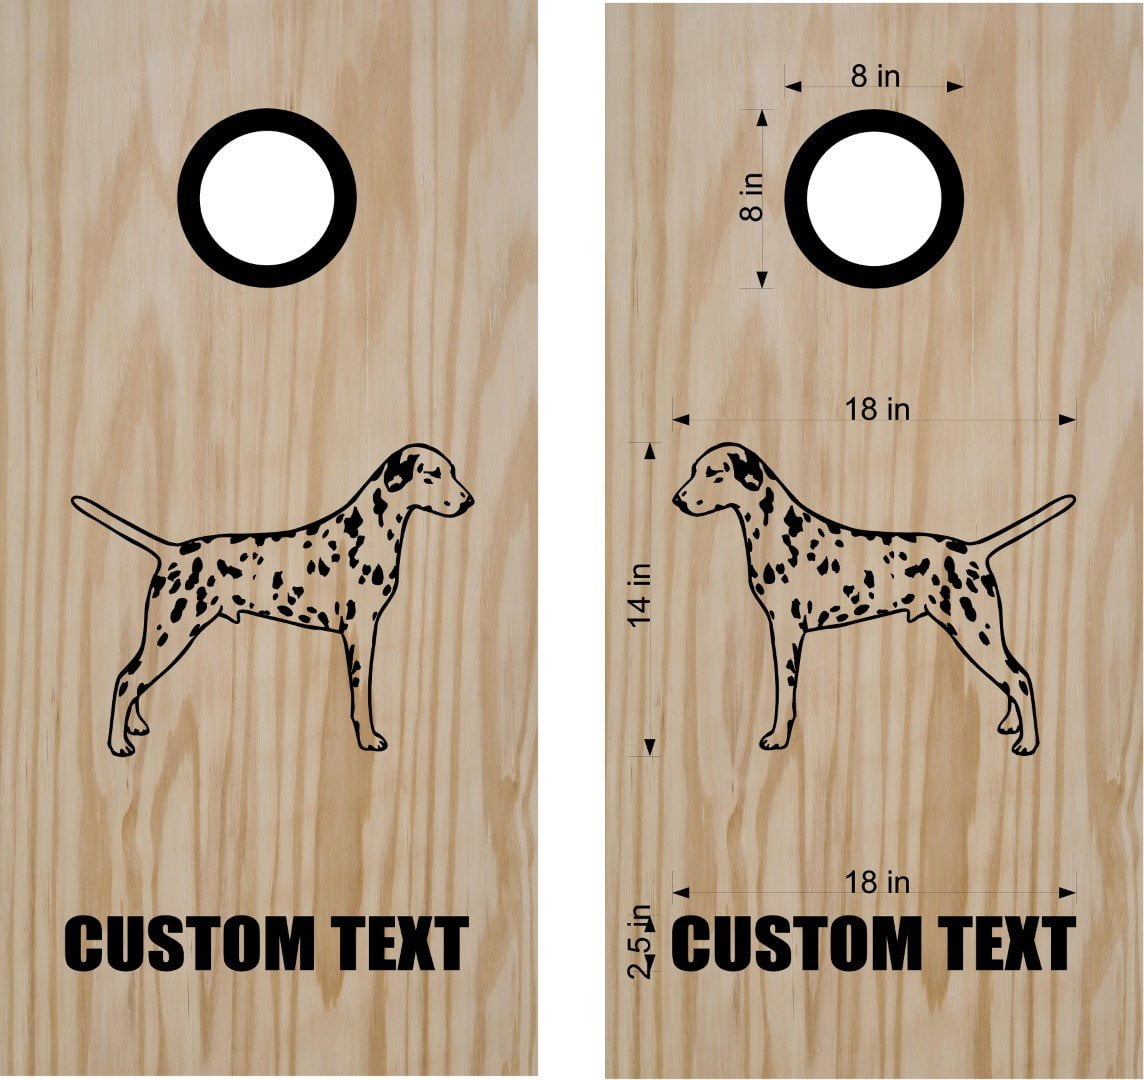 VINYL WRAPS Cornhole Boards DECALS Pitbull Dog Bag Toss Game Stickers 255 